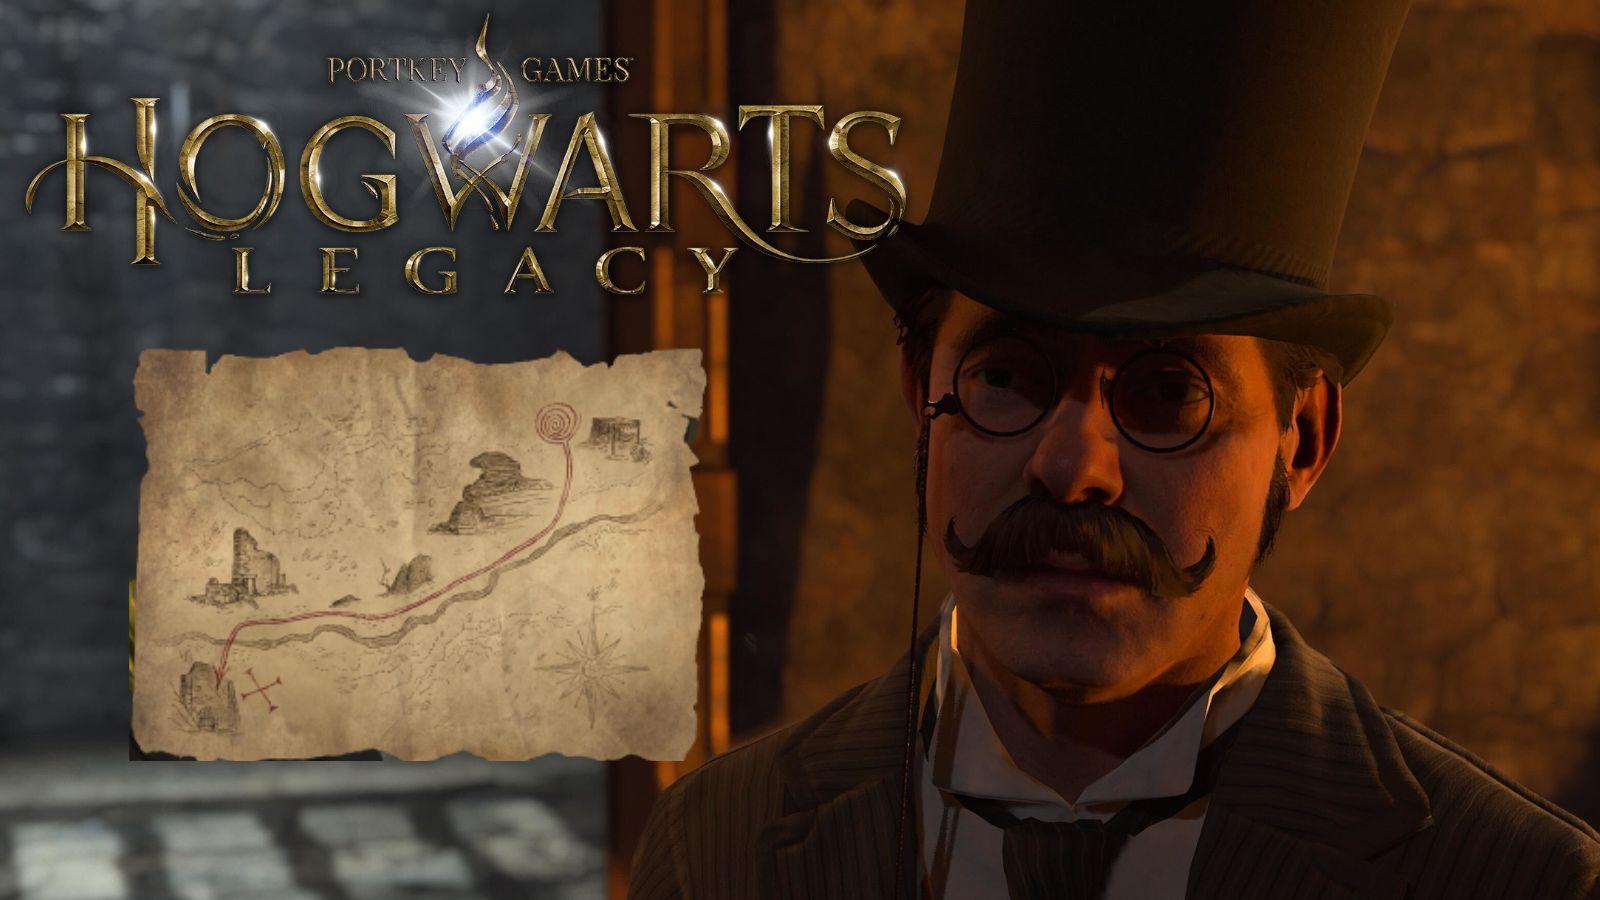 Hogwarts Legacy hits major Steam milestone overtaking Fallout 4 - Dexerto